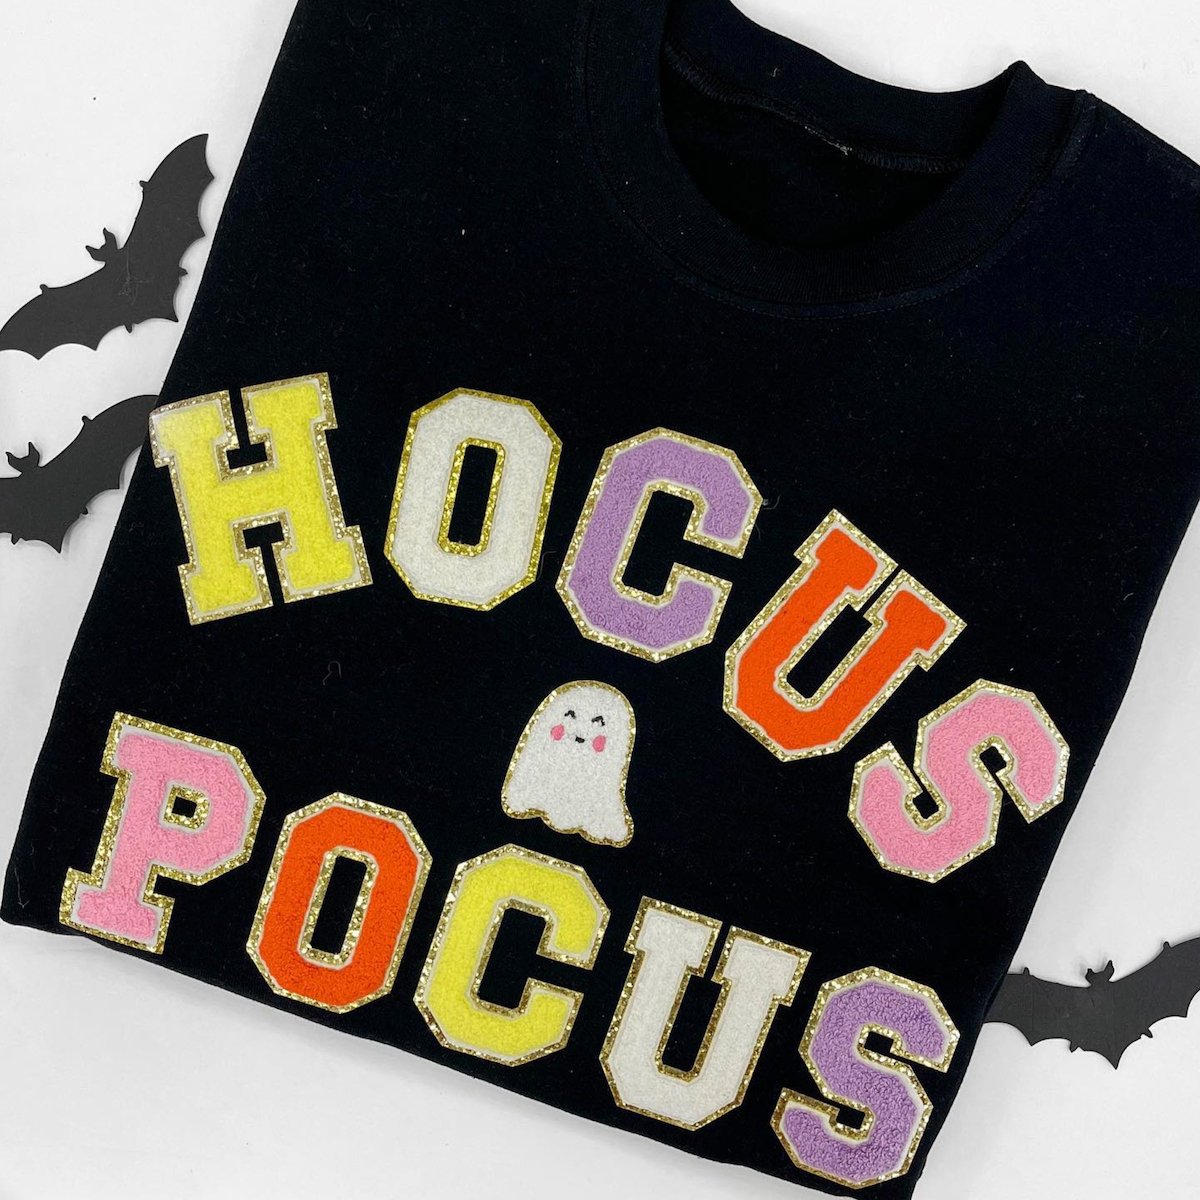 Hocus Pocus Letter Patch Crewneck Sweatshirt - United Monograms